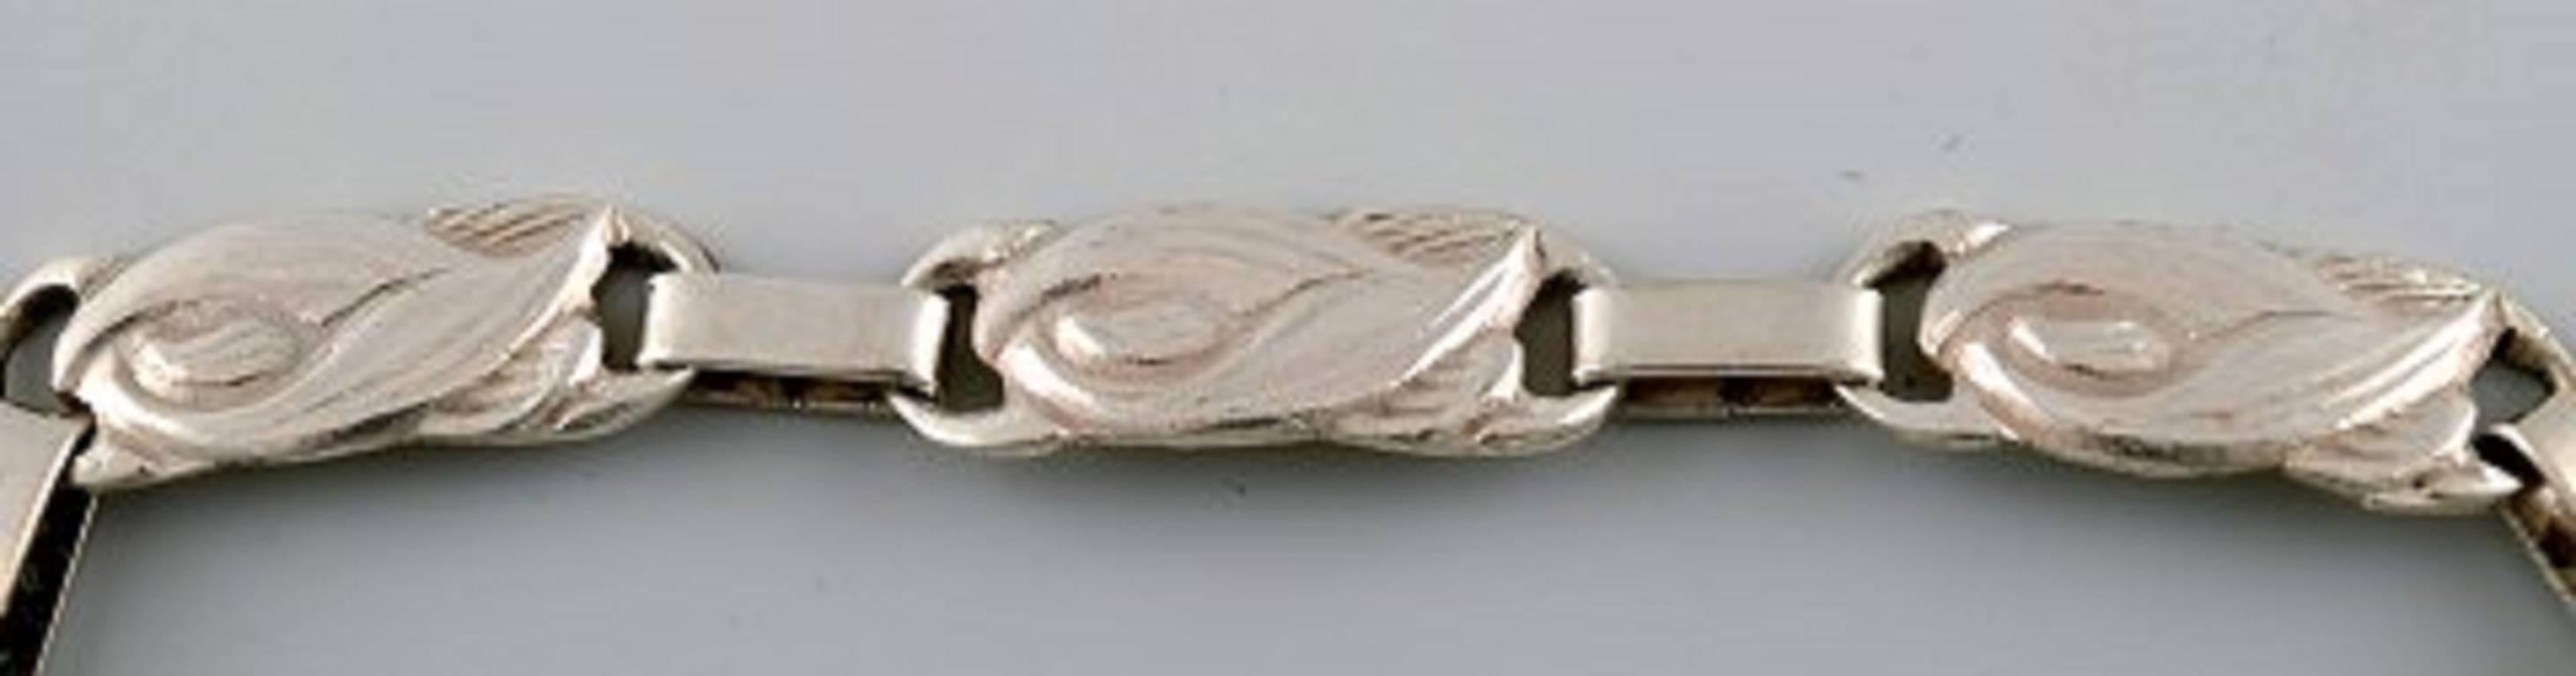 Vintage dänisches Silberarmband in modernem Design, gestempelt CCGÅ, 830S.
1930 / 40s.
In perfektem Zustand.
Maße: 16 cm.